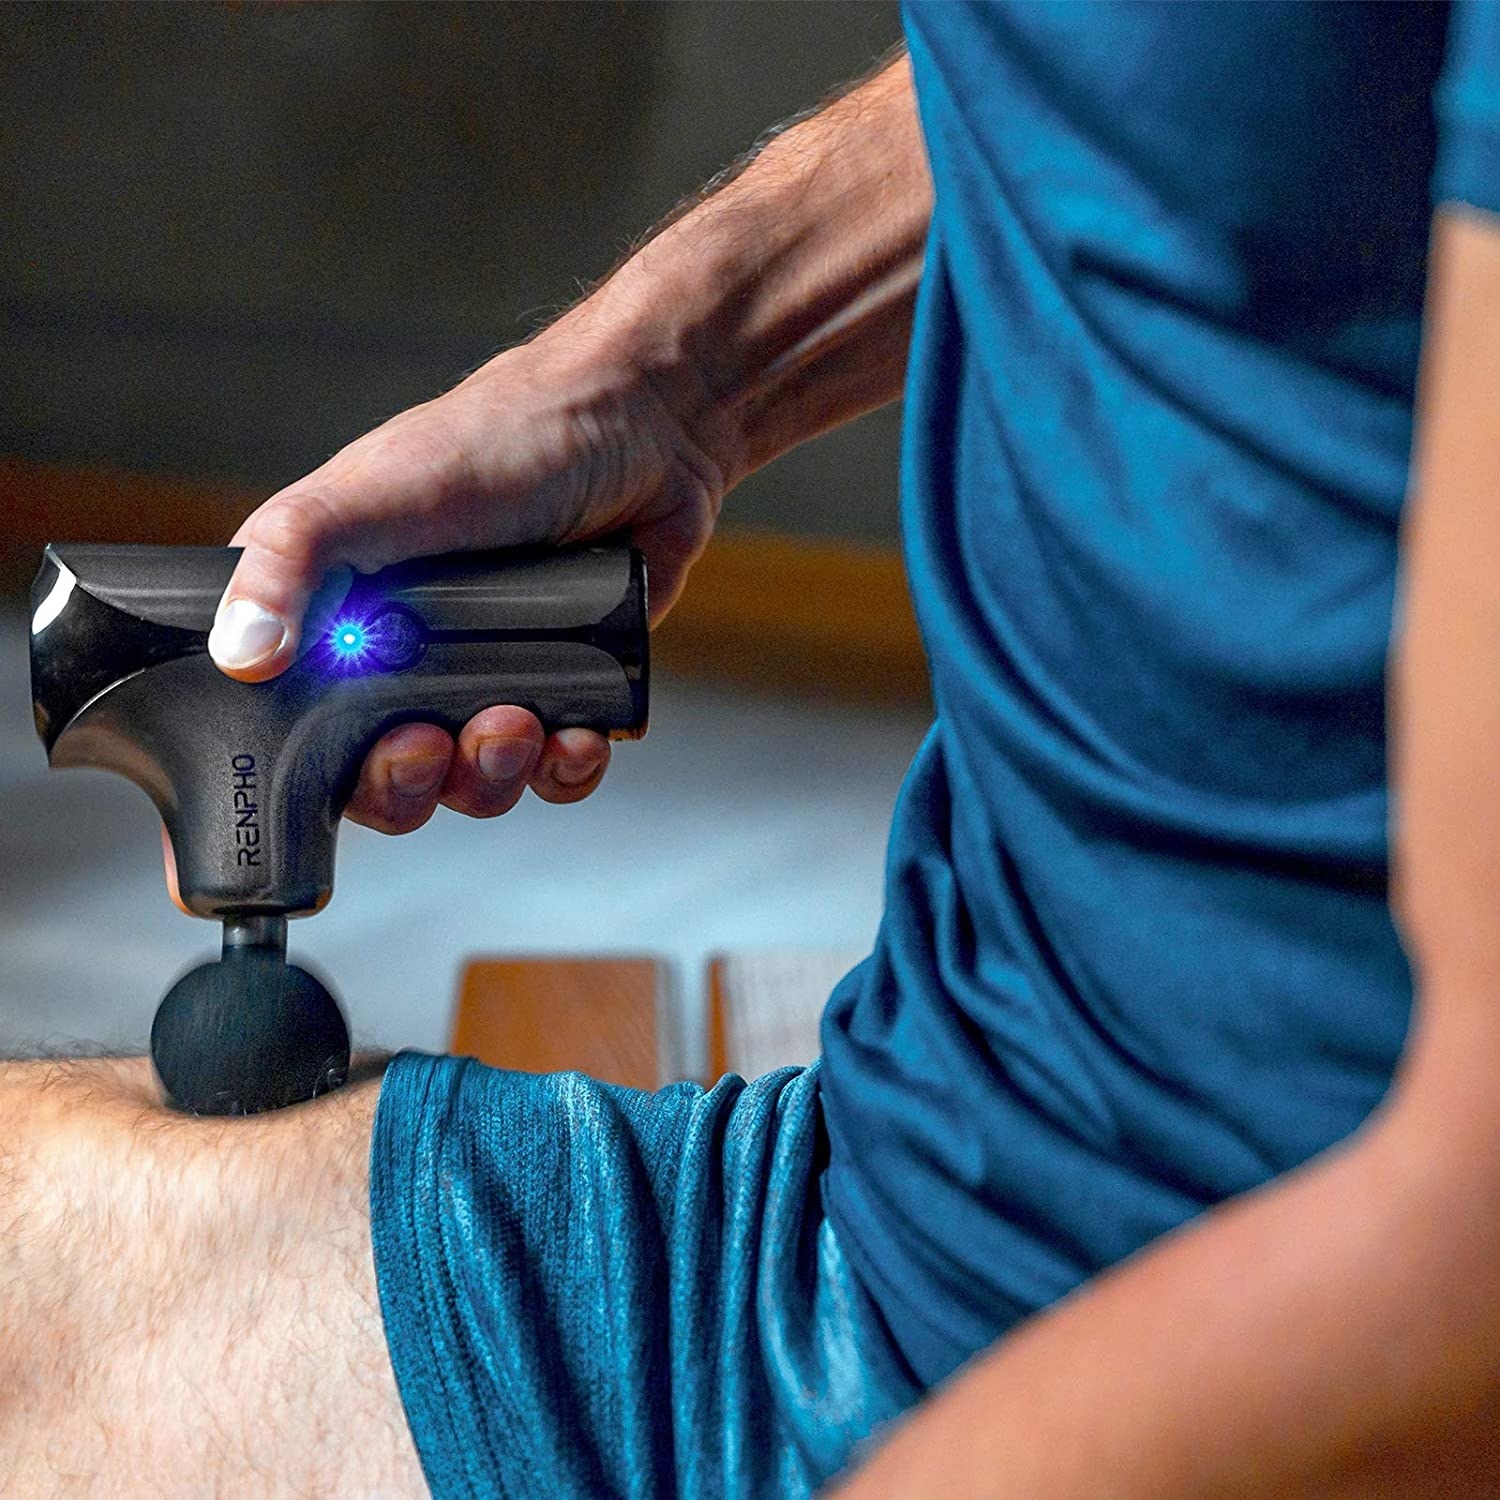 A person using the massage gun on their thigh